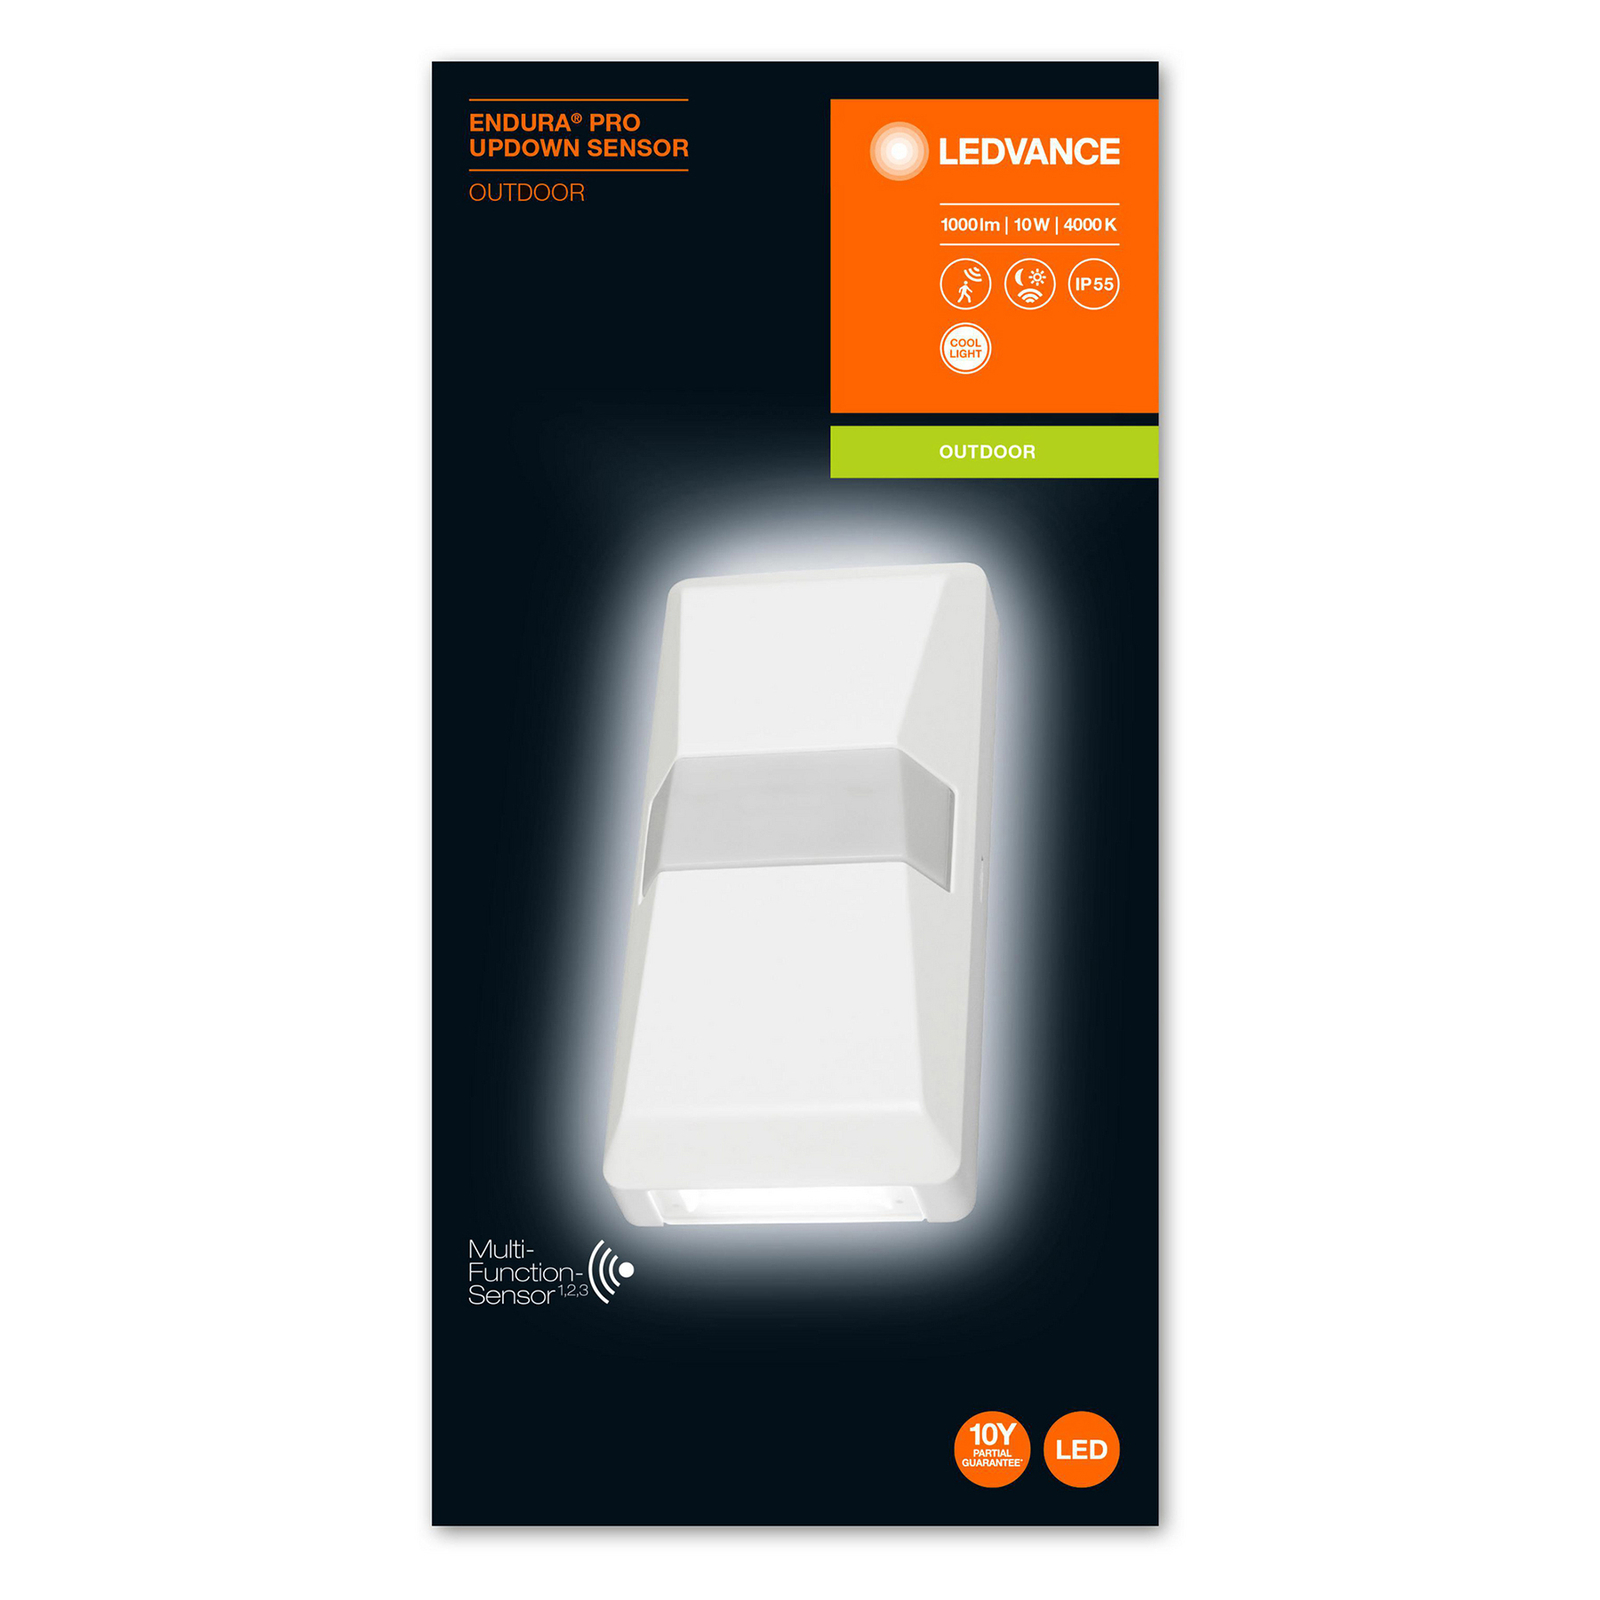 LEDVANCE Endura Pro UpDown Sensor white